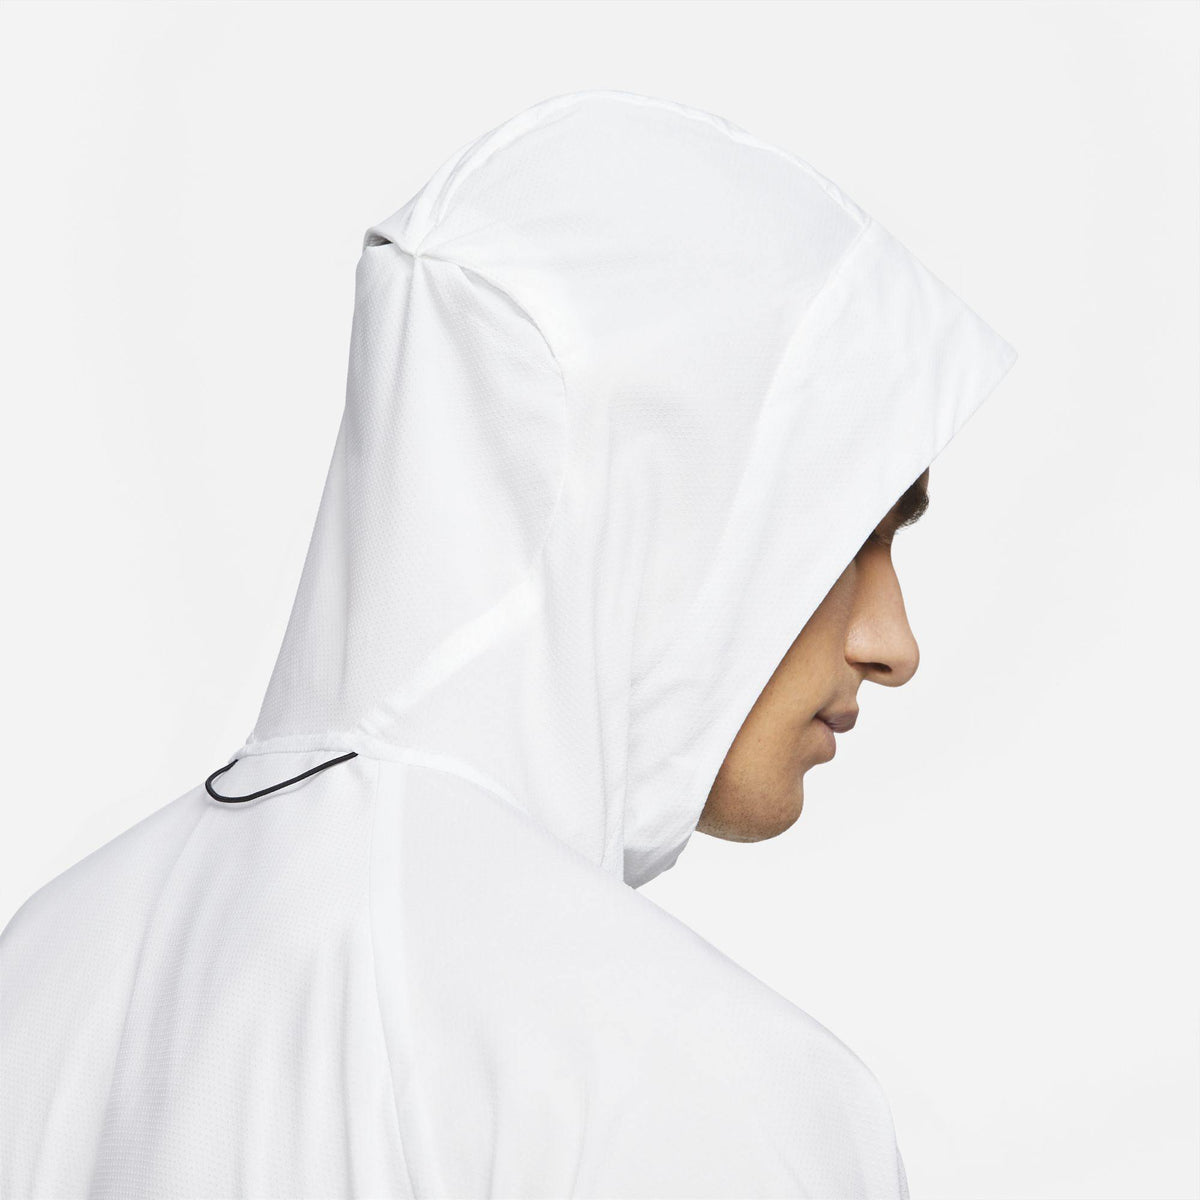 Nike Windrunner Jacket Mens APPAREL - Mens Jackets 